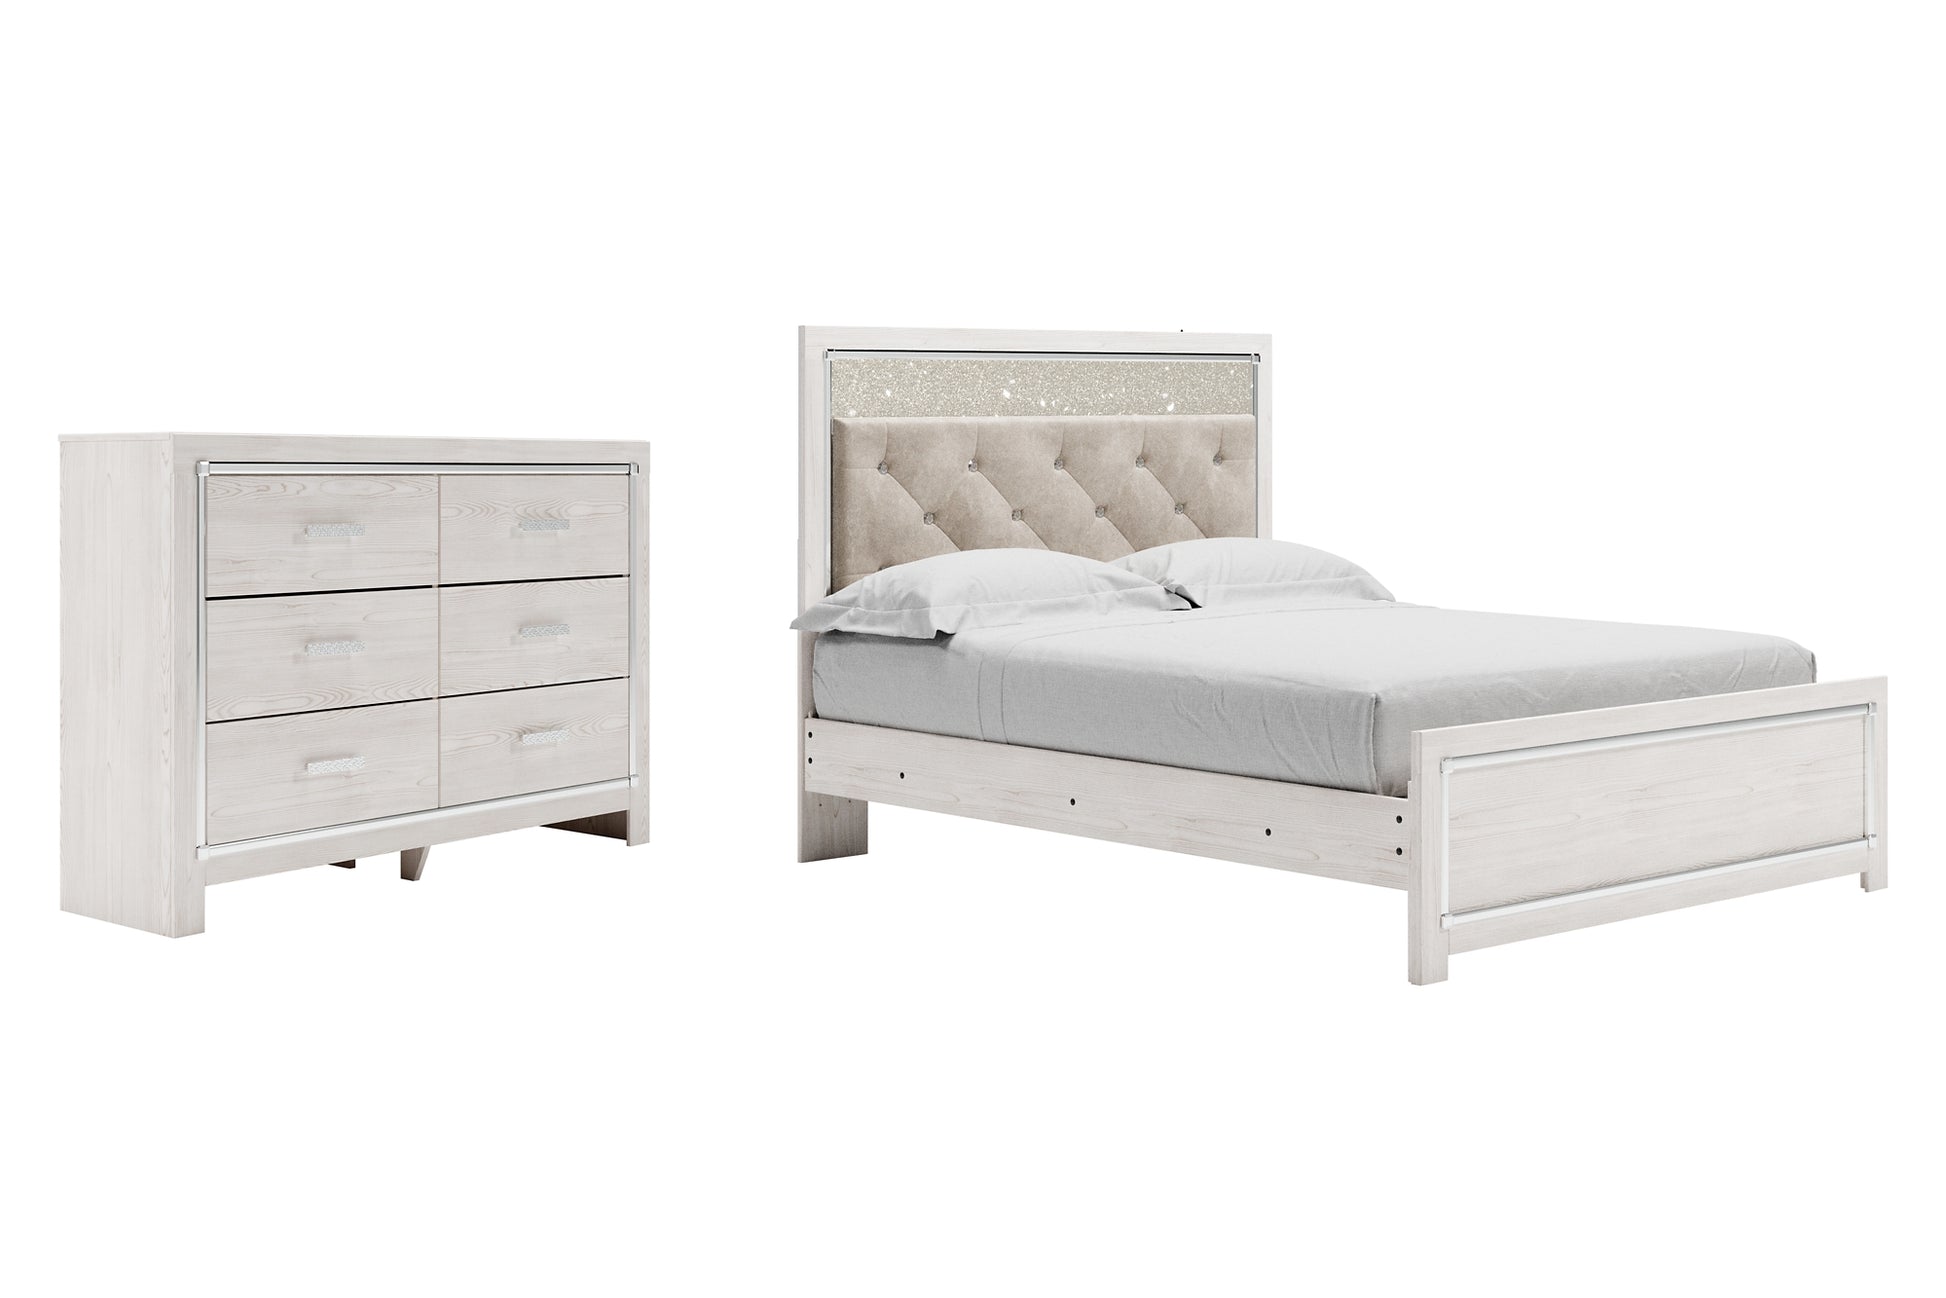 Altyra Queen Panel Bed with Dresser Wilson Furniture (OH)  in Bridgeport, Ohio. Serving Bridgeport, Yorkville, Bellaire, & Avondale